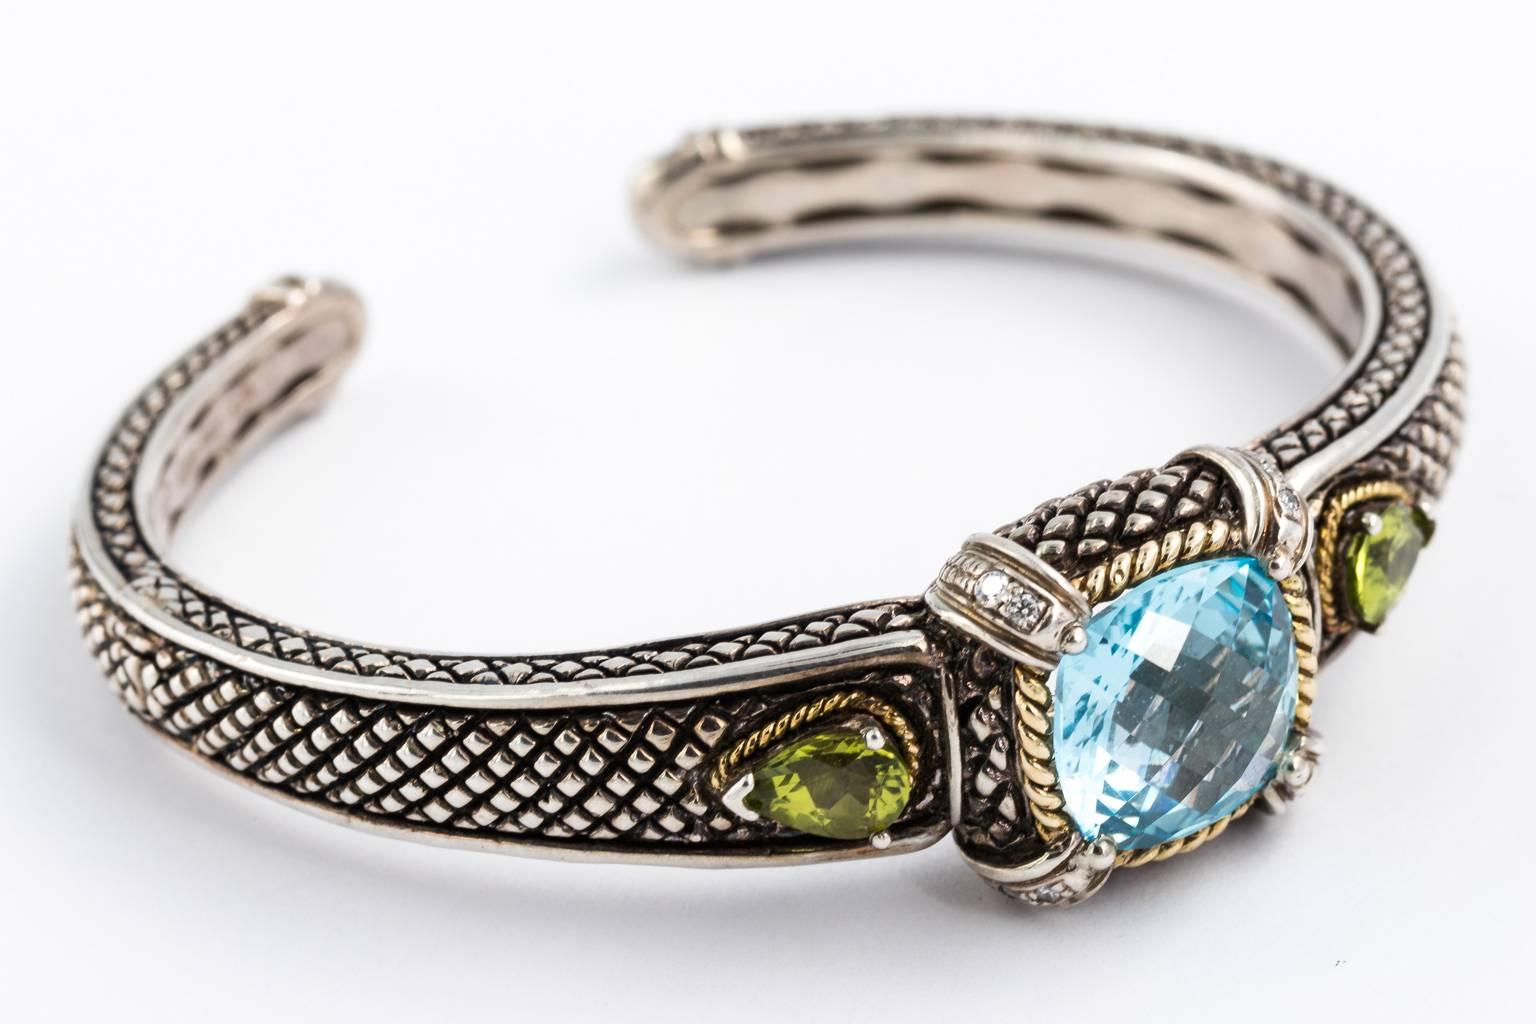 Andrea Candela bracelet, sterling silver, 18 karat, pave diamonds, blue topaz, green tourmaline semi precious stones hinged opening.